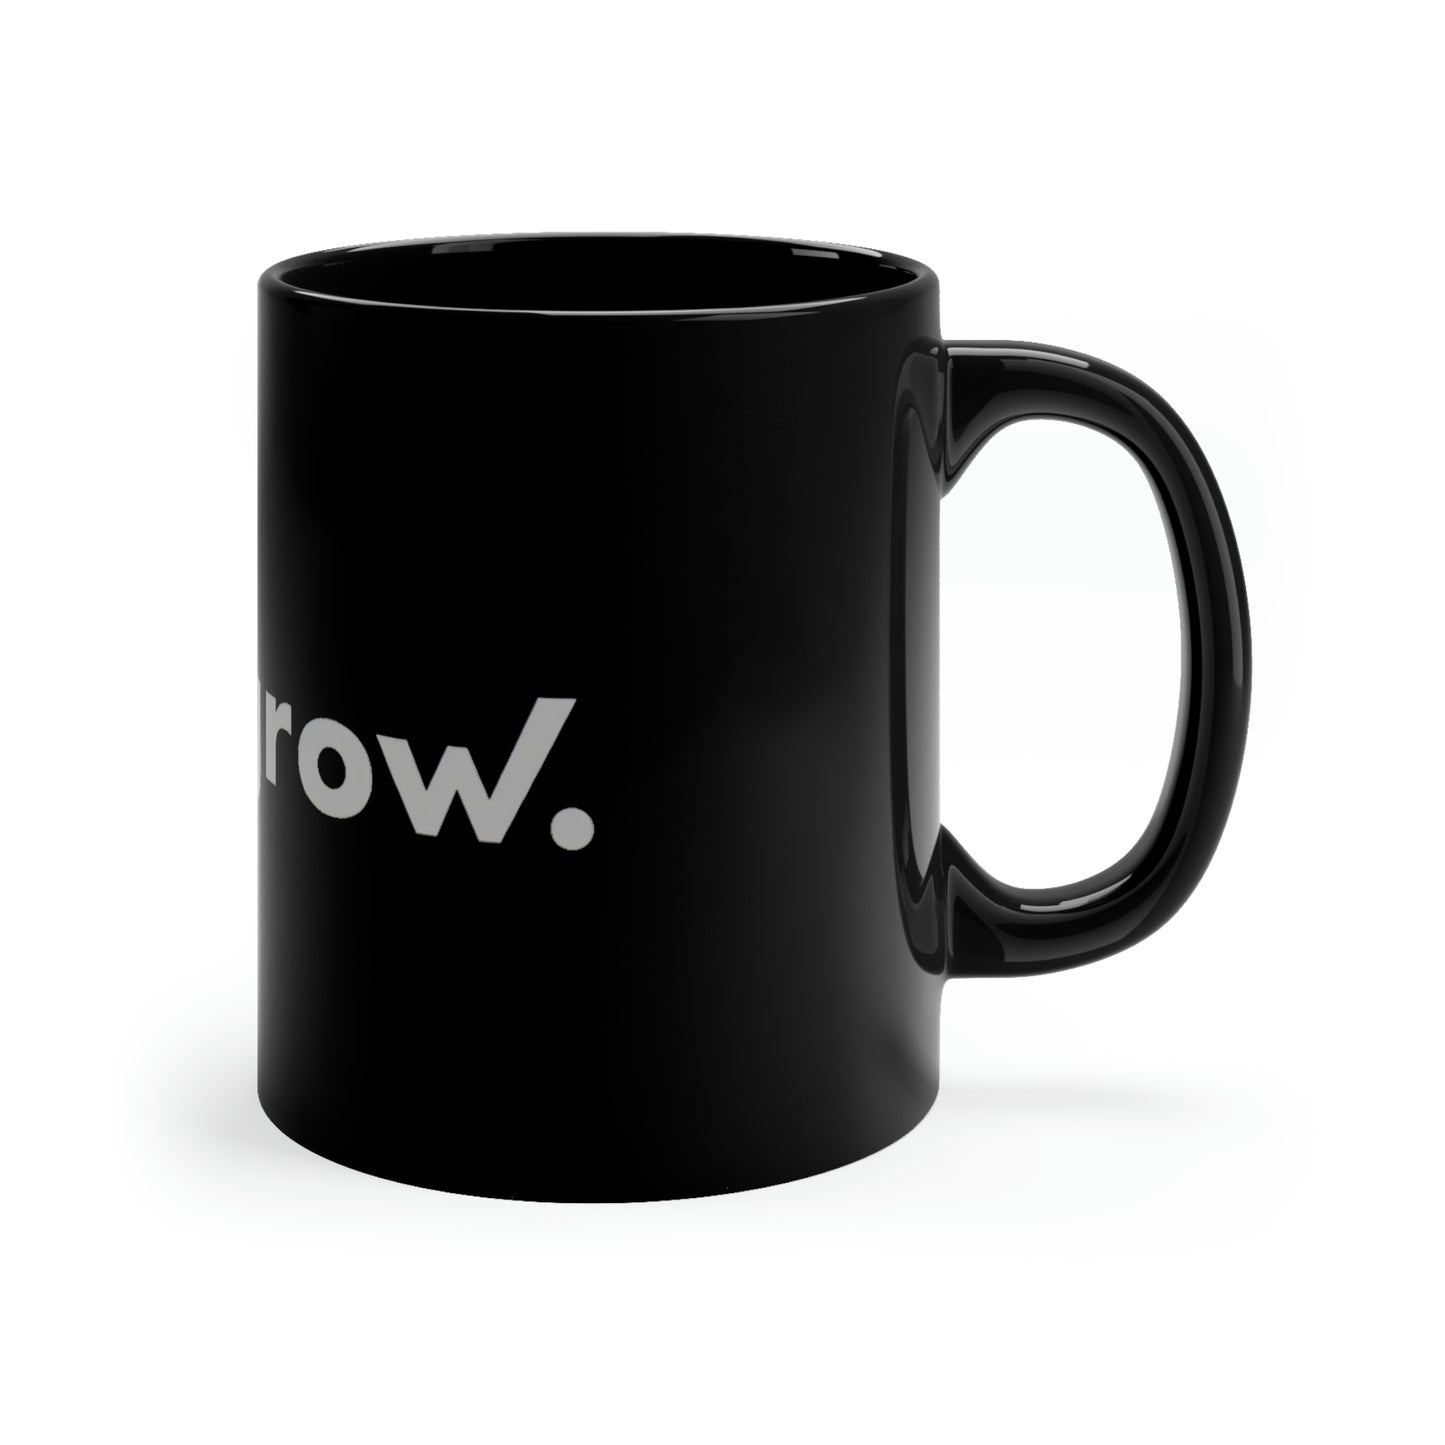 USA - 11oz Black Mug with evergrow in gray